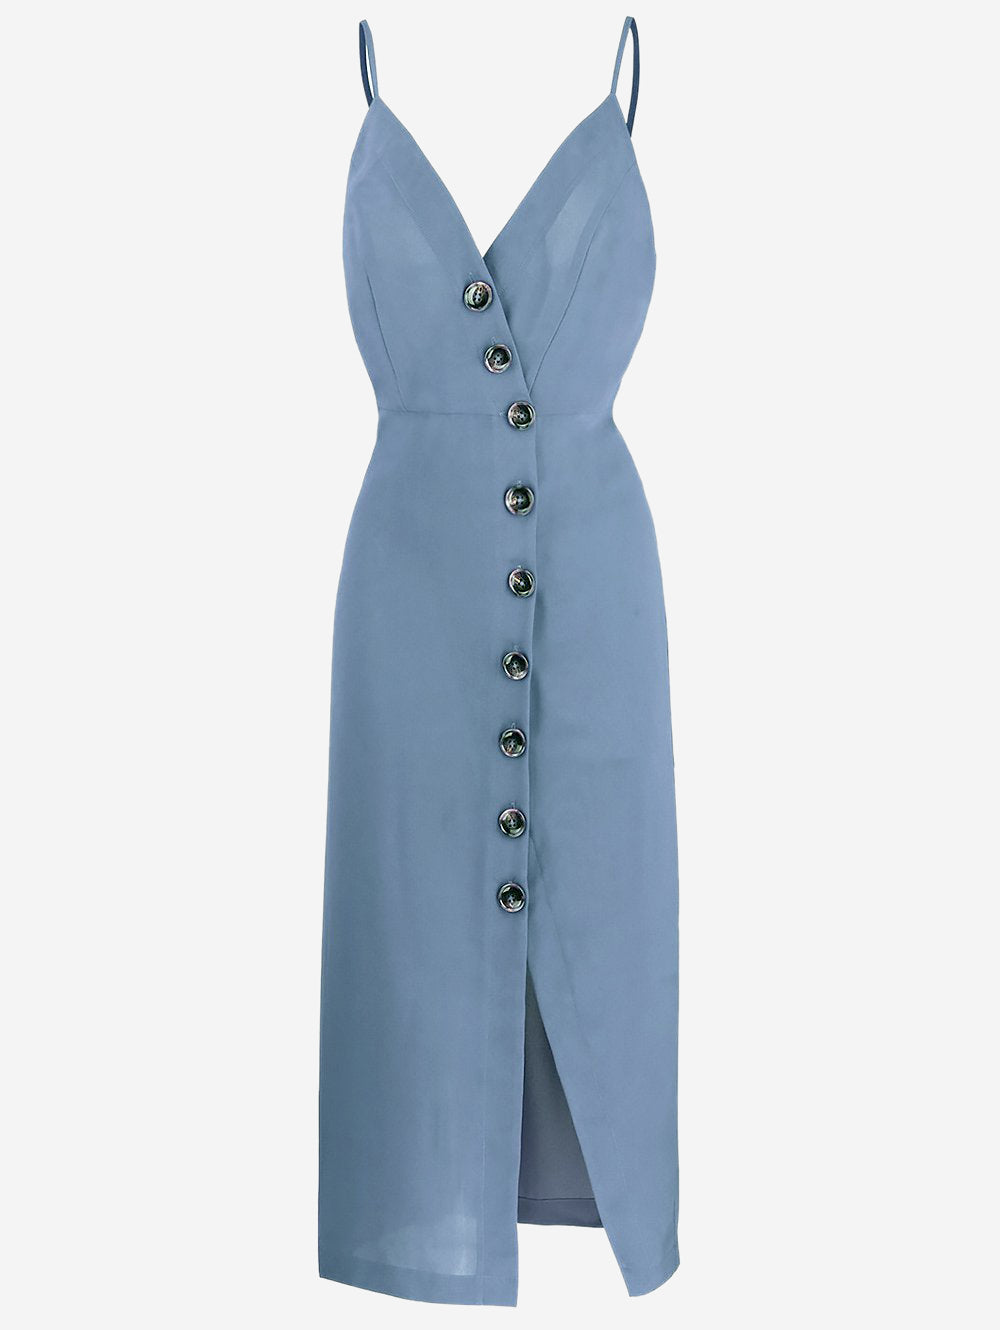 audrey hepburn 1950s dresses